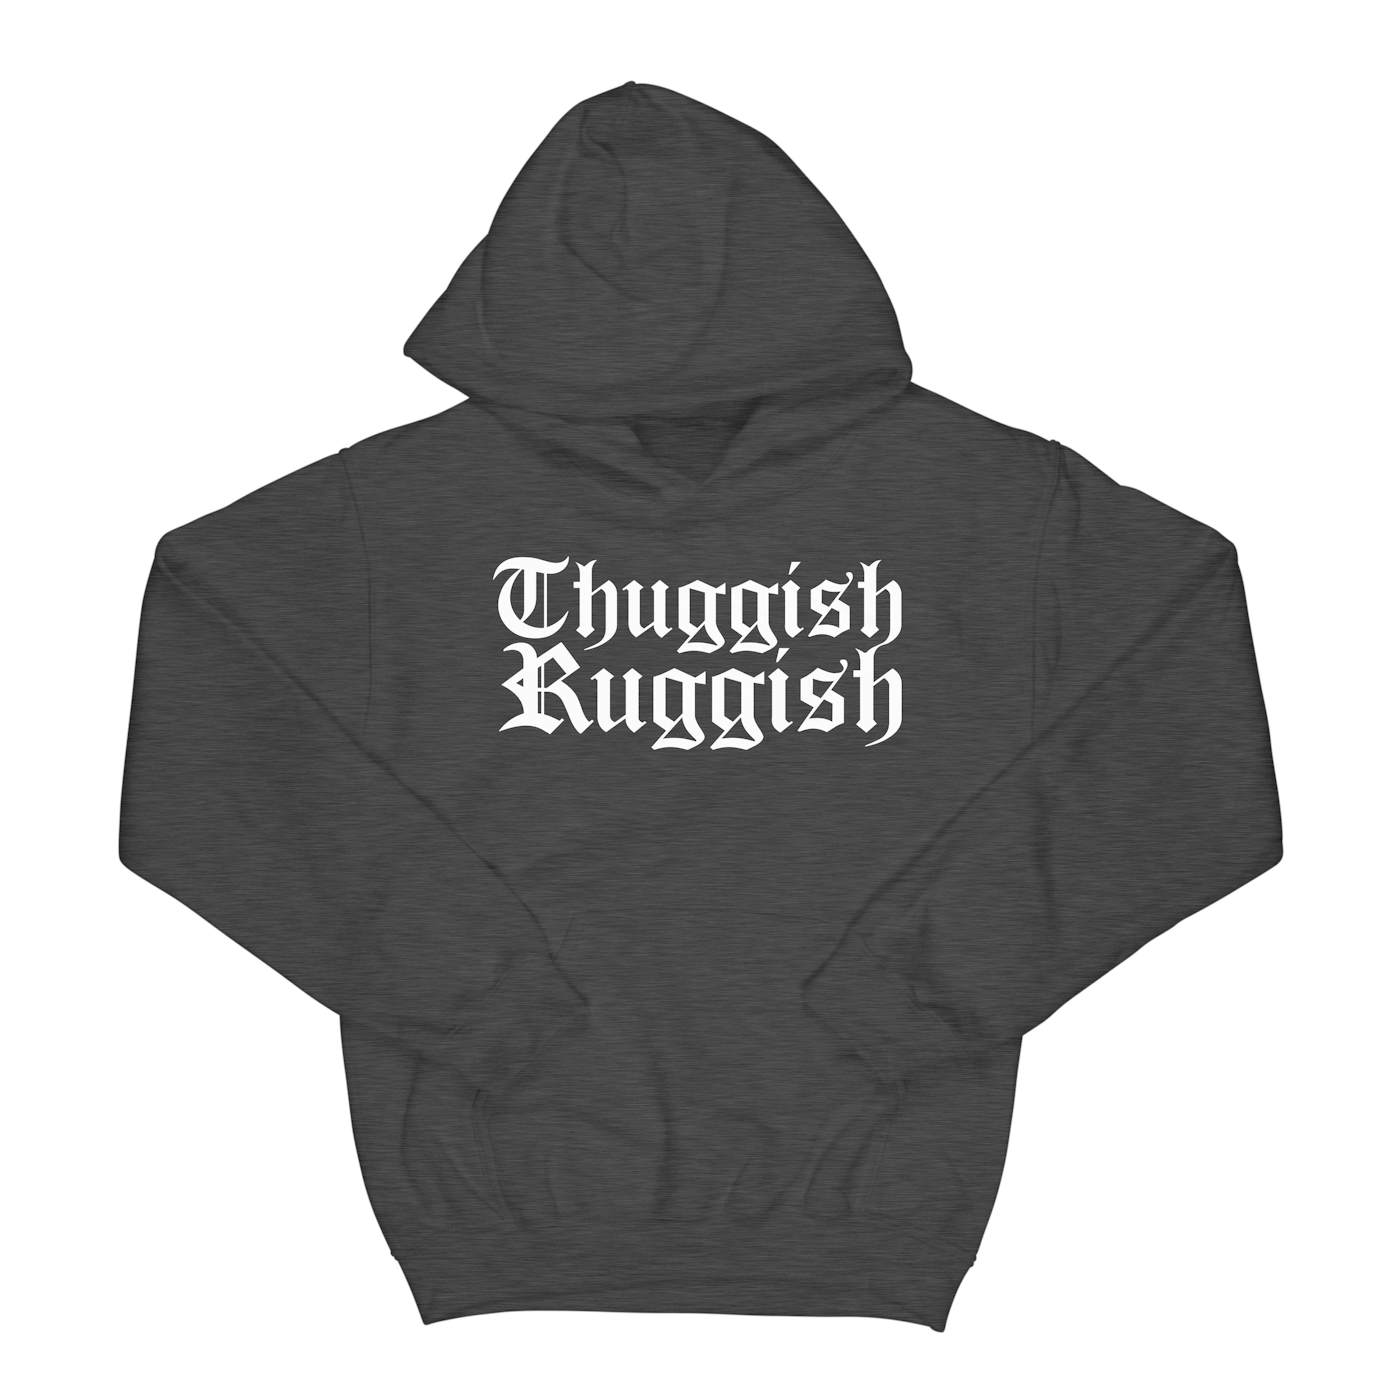 Bone Thugs-N-Harmony Thuggish Ruggish "White Logo" Hoodie